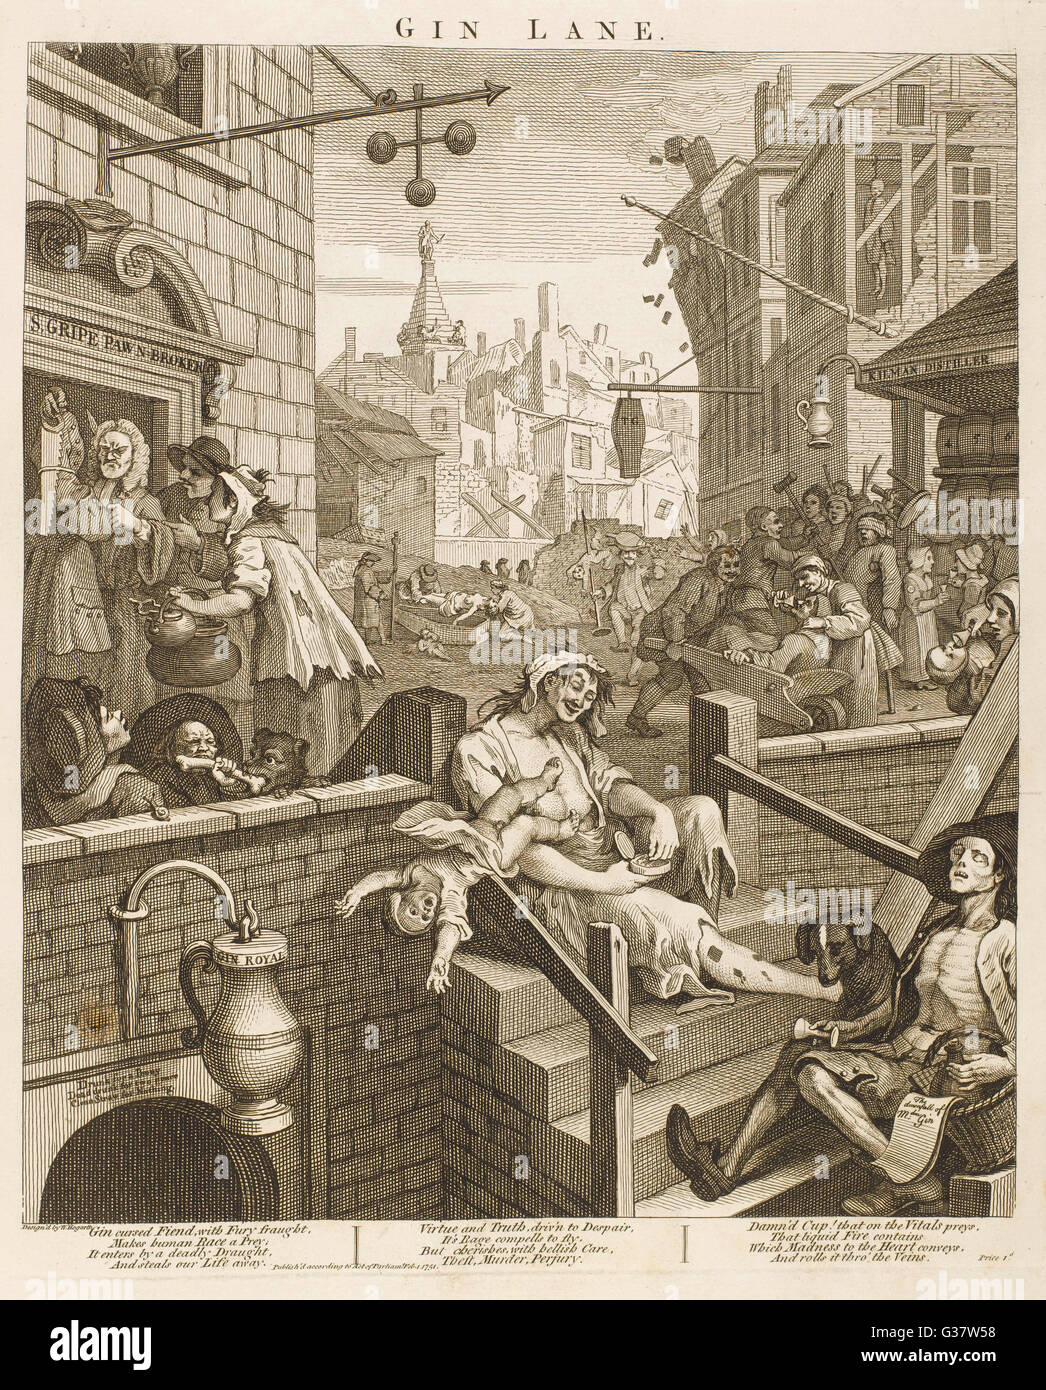 Il gin LANE. Data: circa 1780 Foto Stock